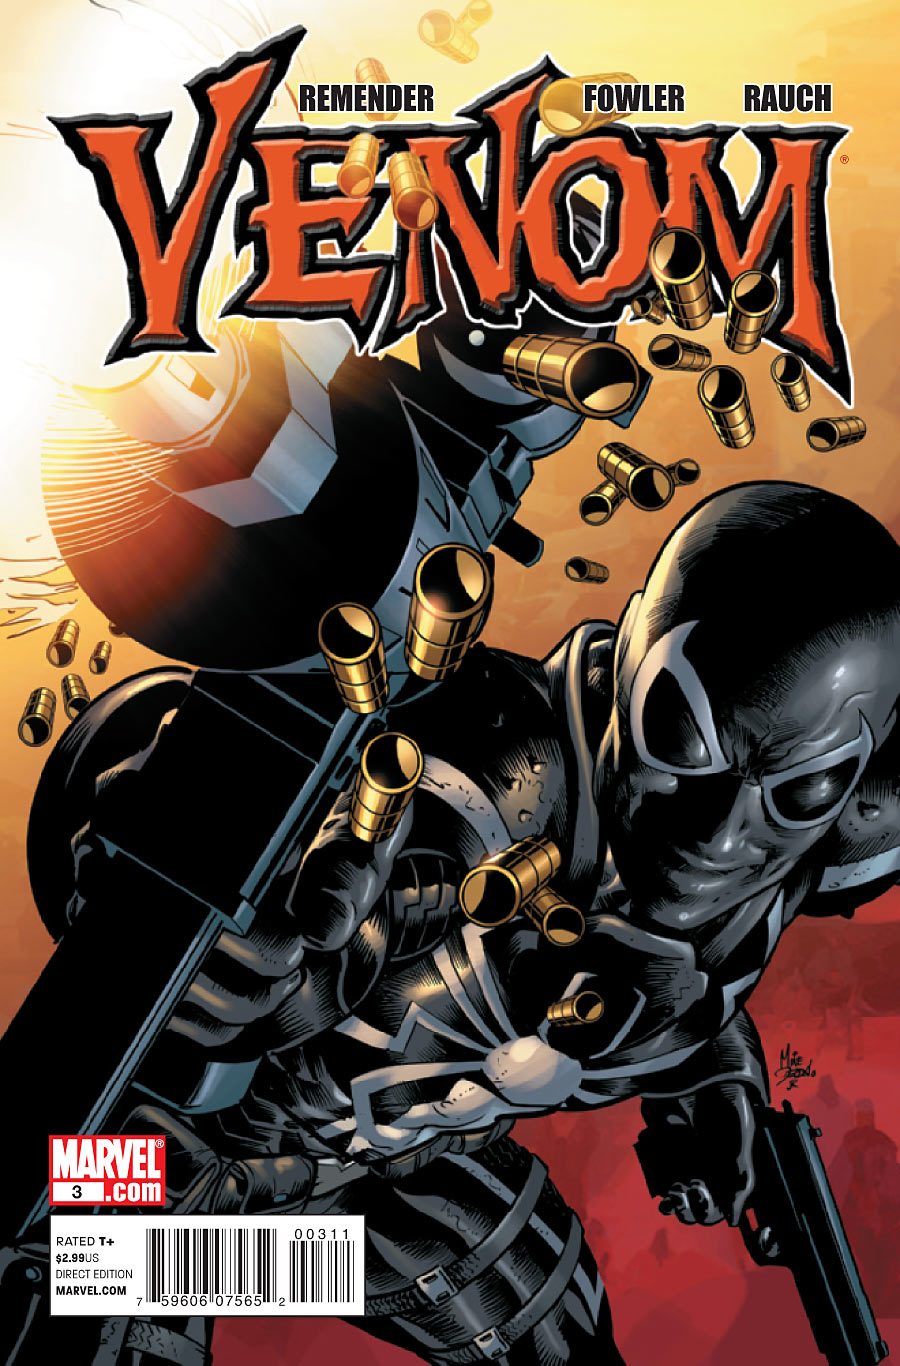 Venom Vol. 2 #3